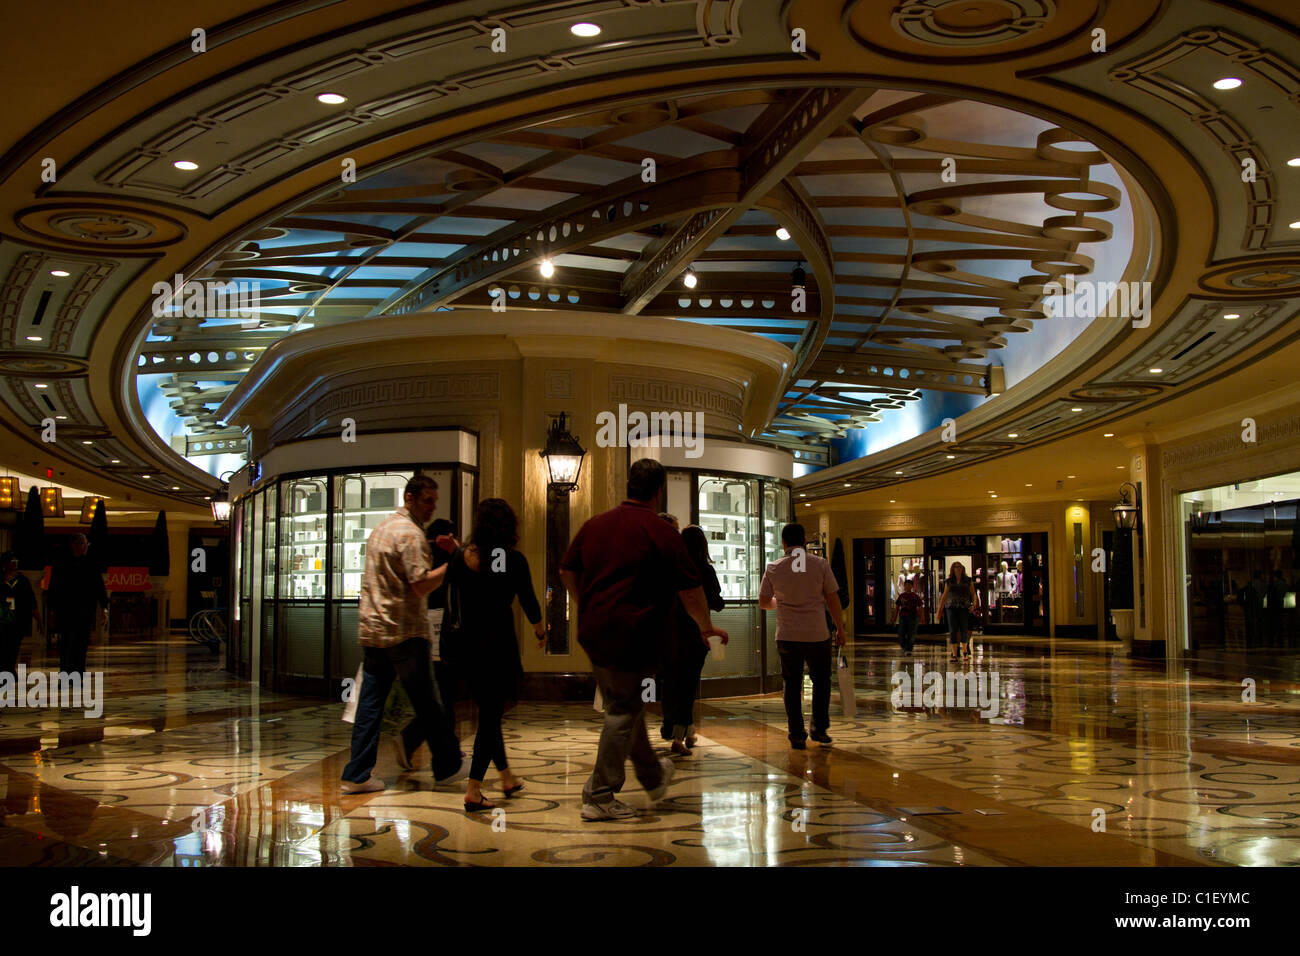 people walking indoor mall palazzo las vegas Stock Photo